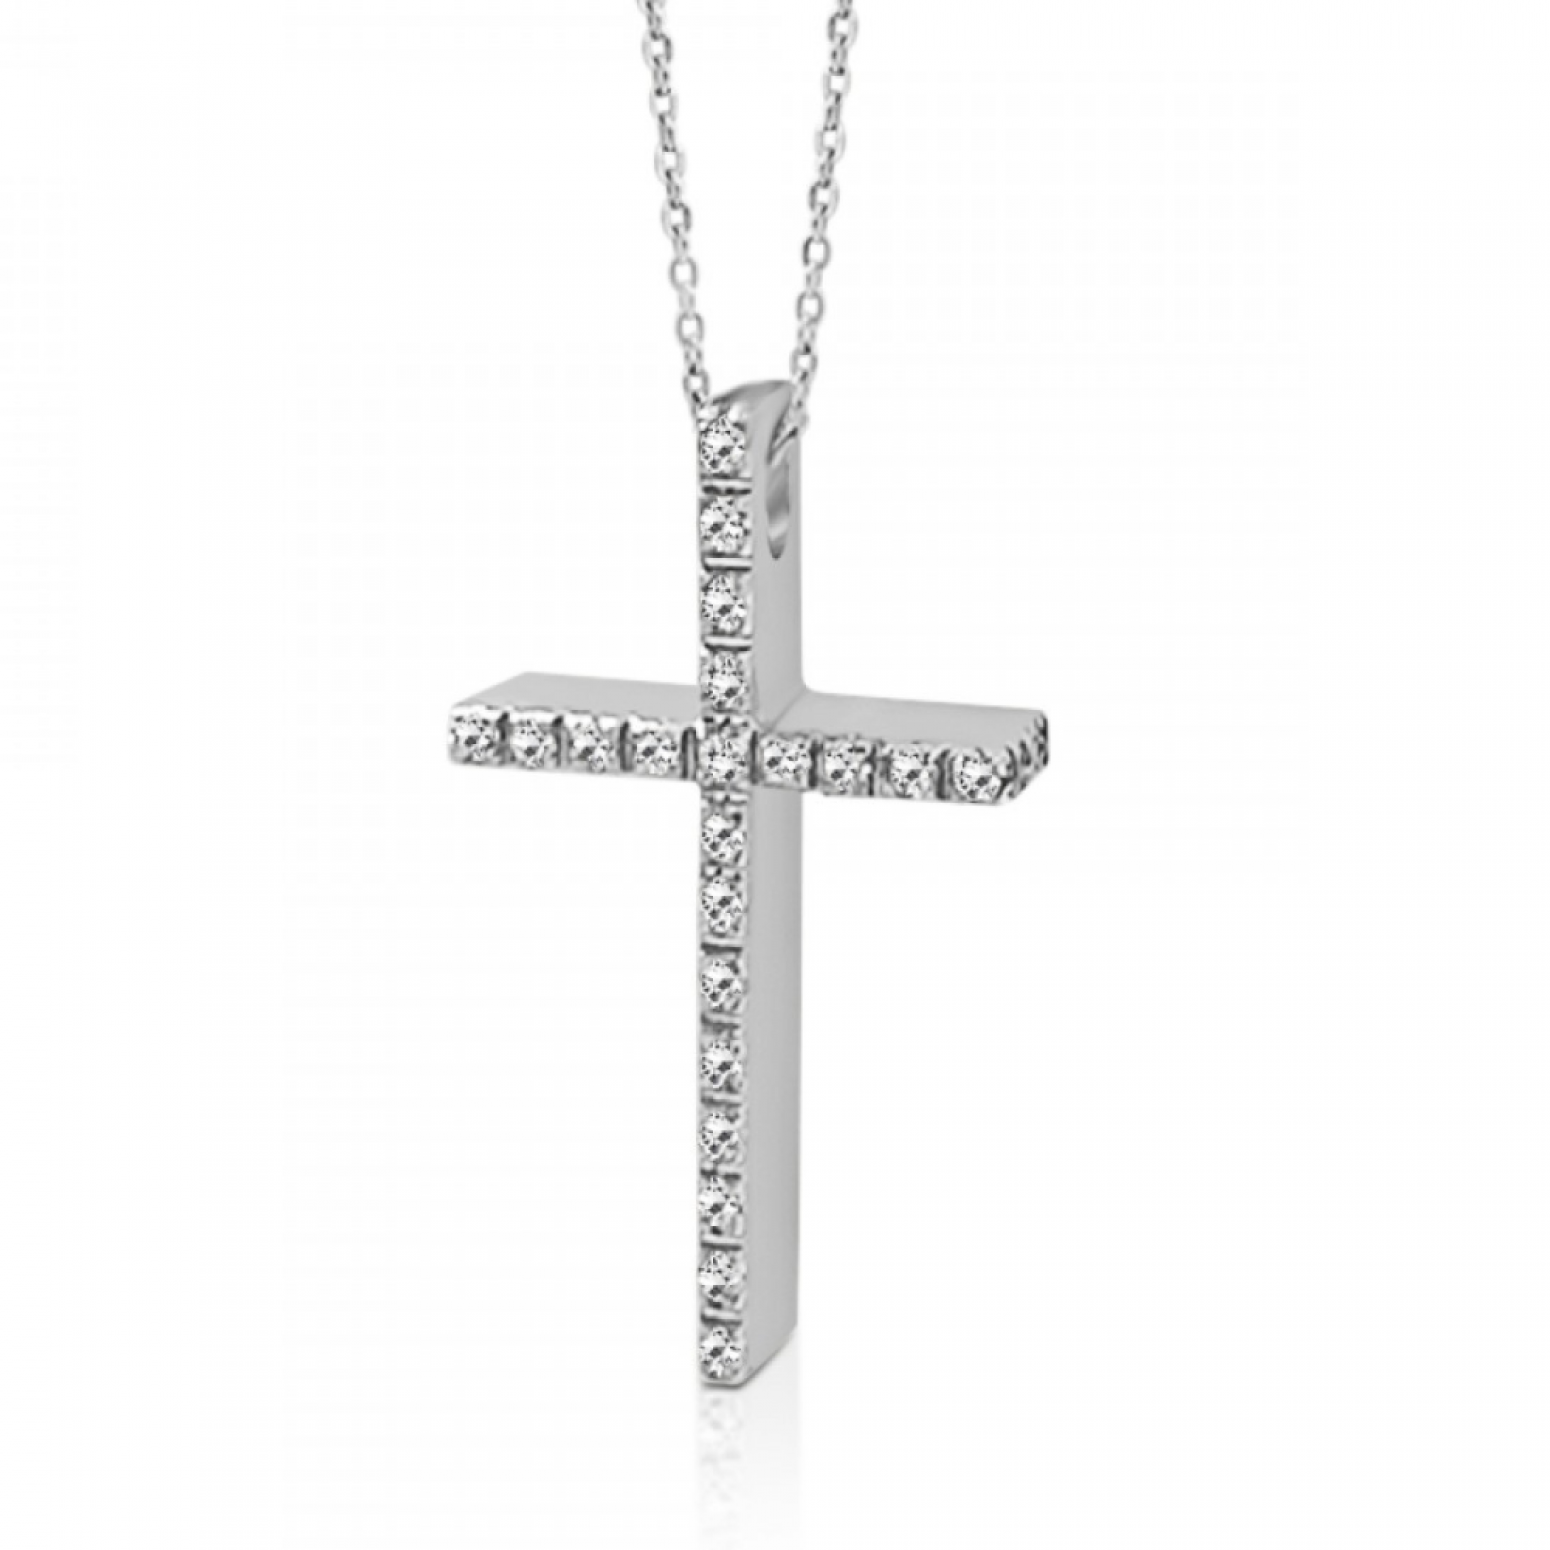 Double sided baptism cross with chain K14 white gold with zircon, ko5237 CROSSES Κοσμηματα - chrilia.gr